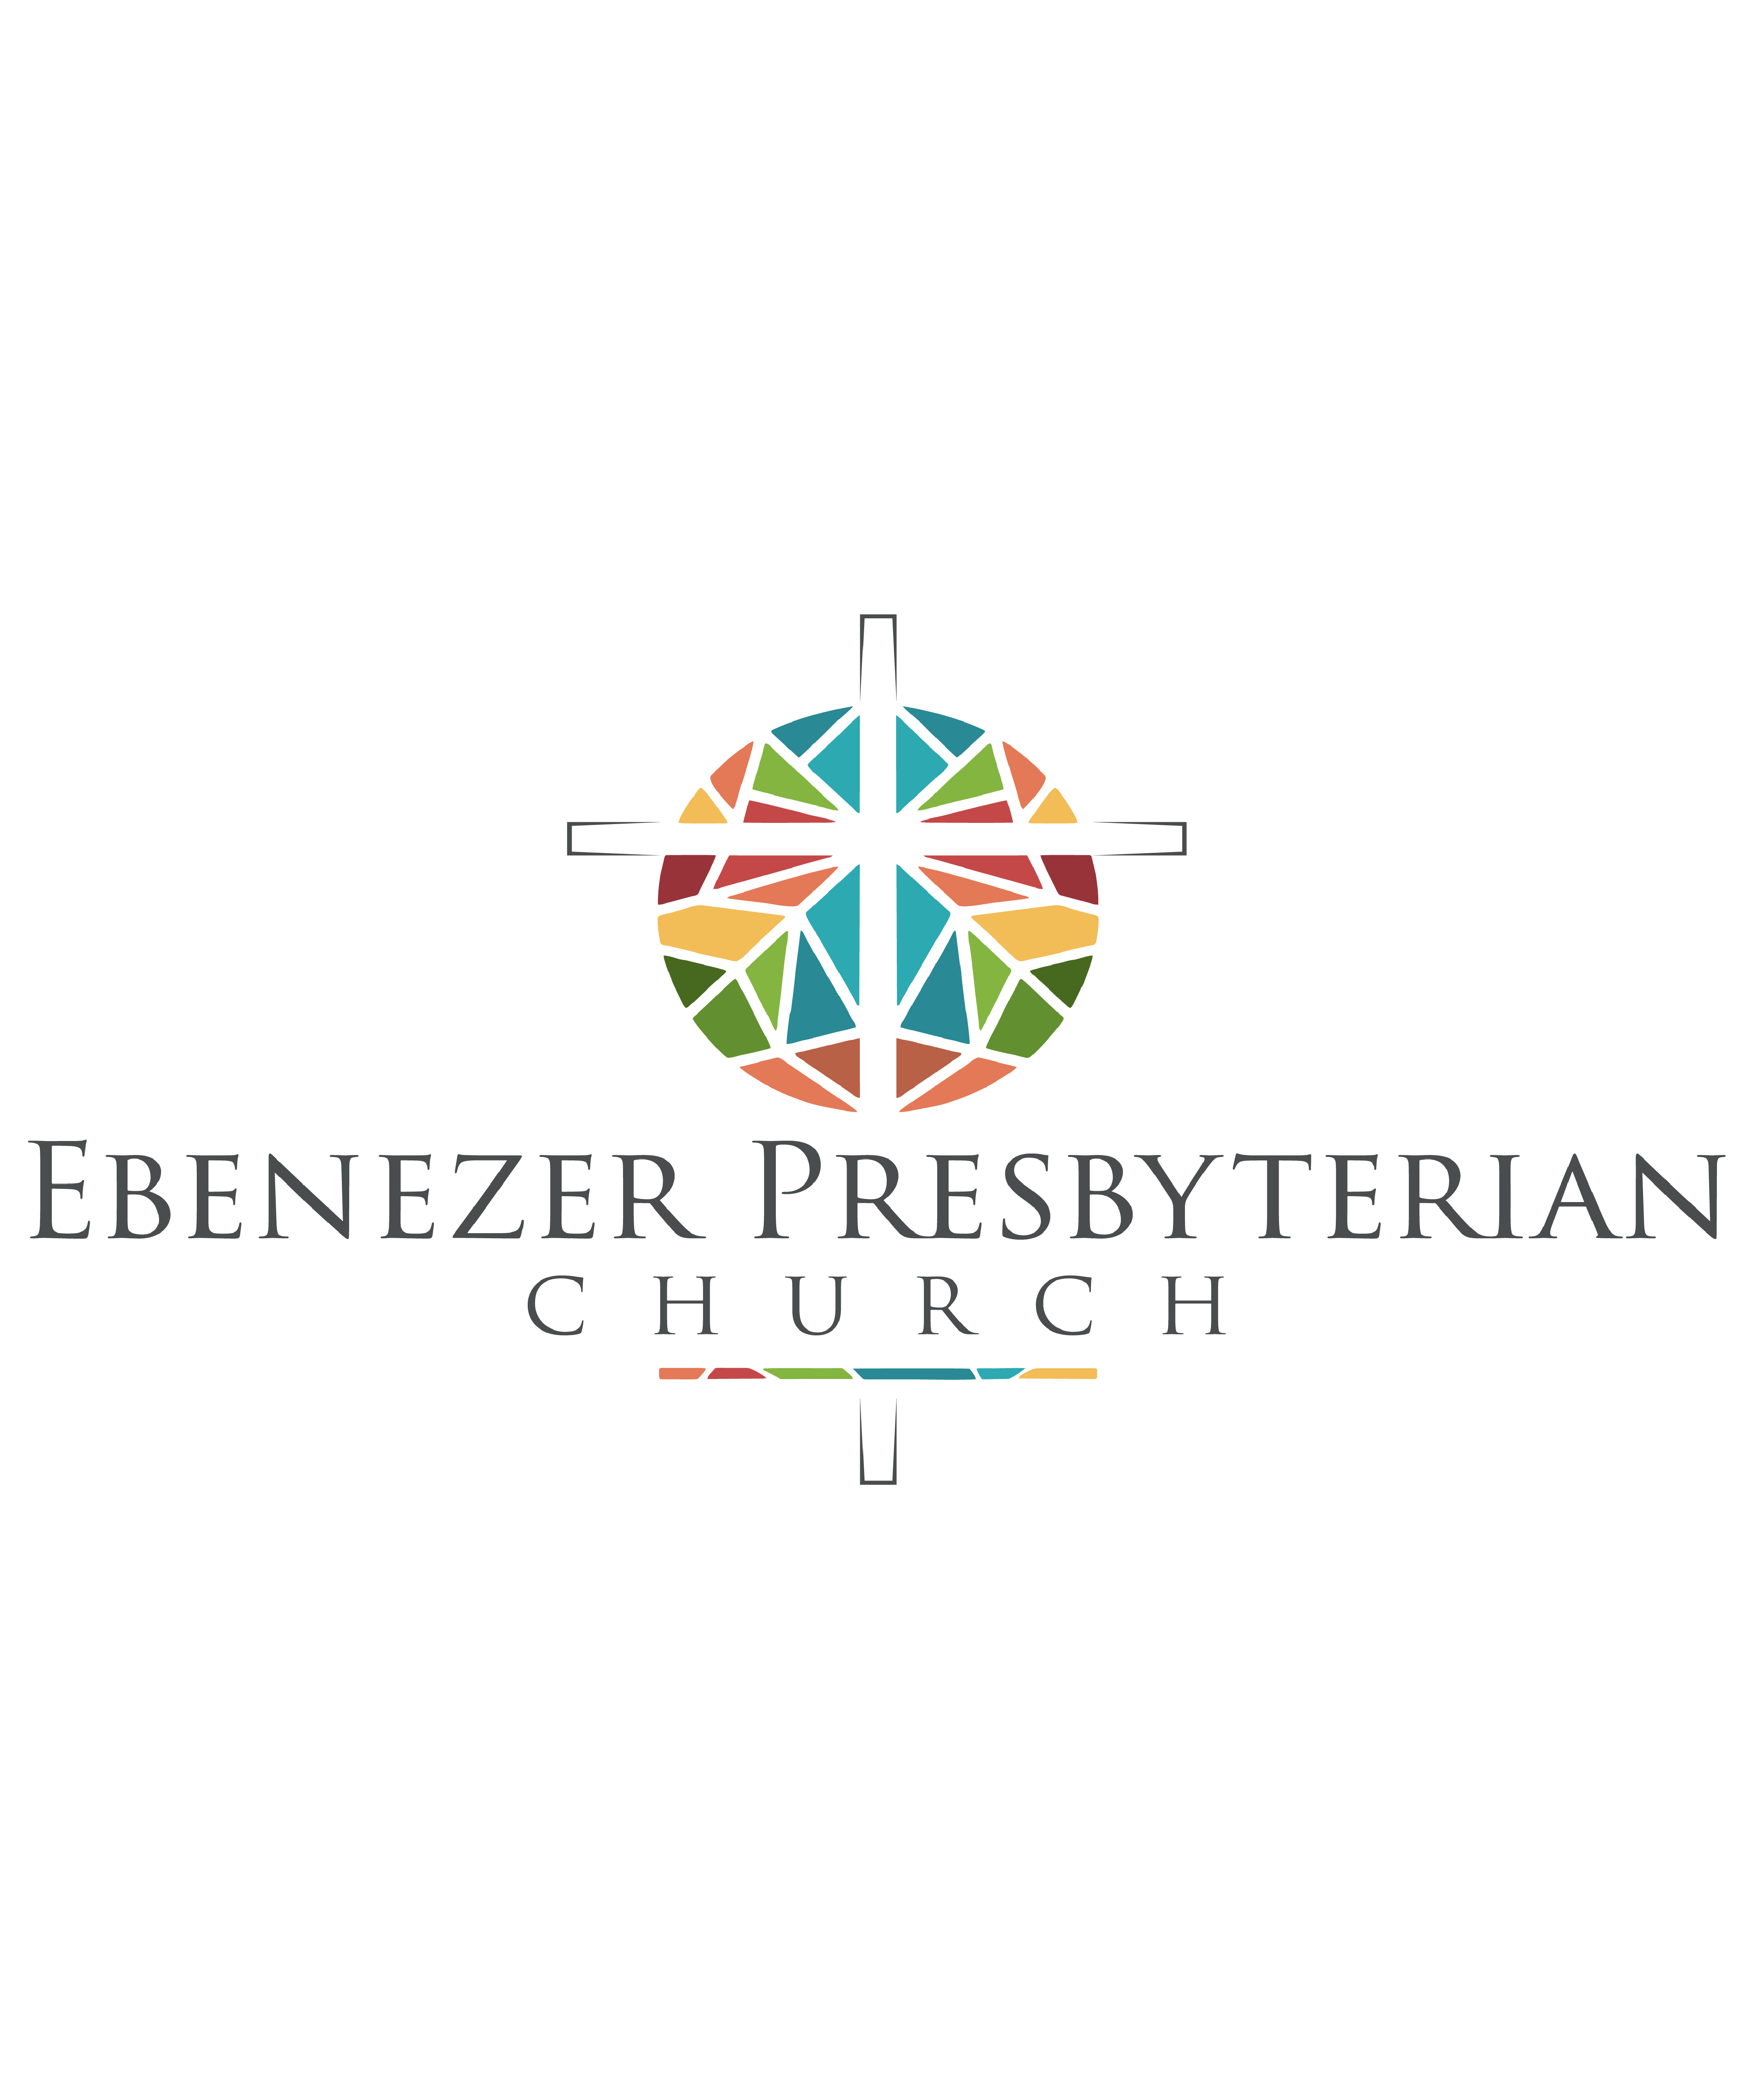 Ebenezer Presbyterian Church logo